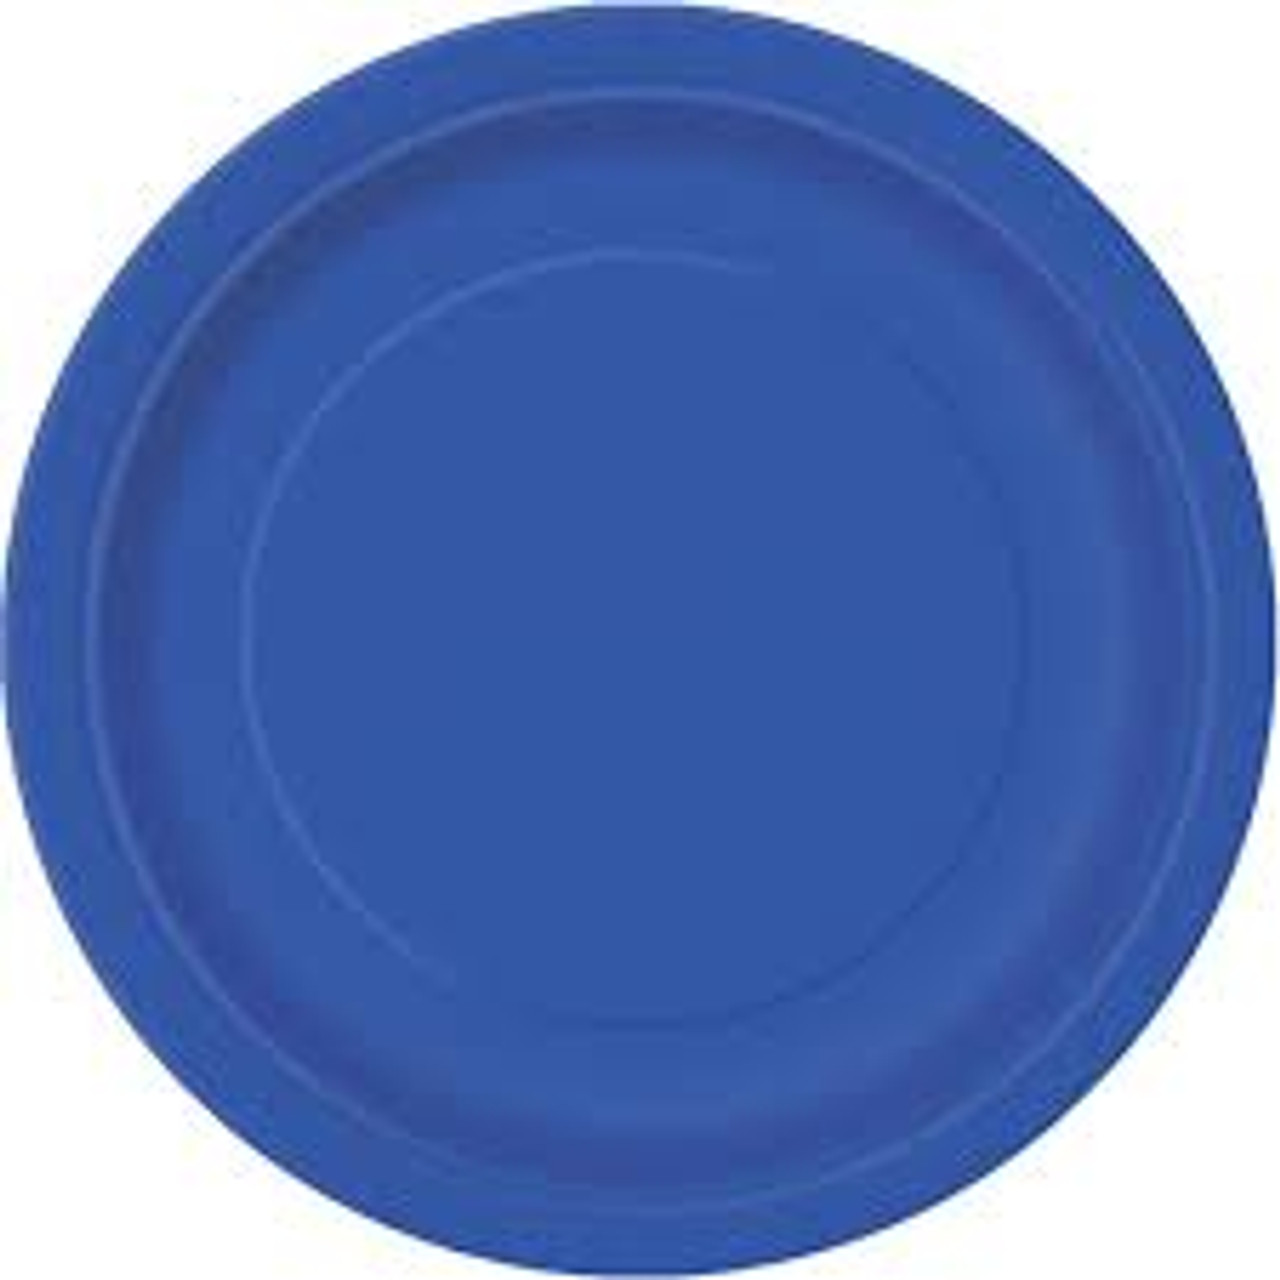 DESSERT PLATES 24CT BLUE